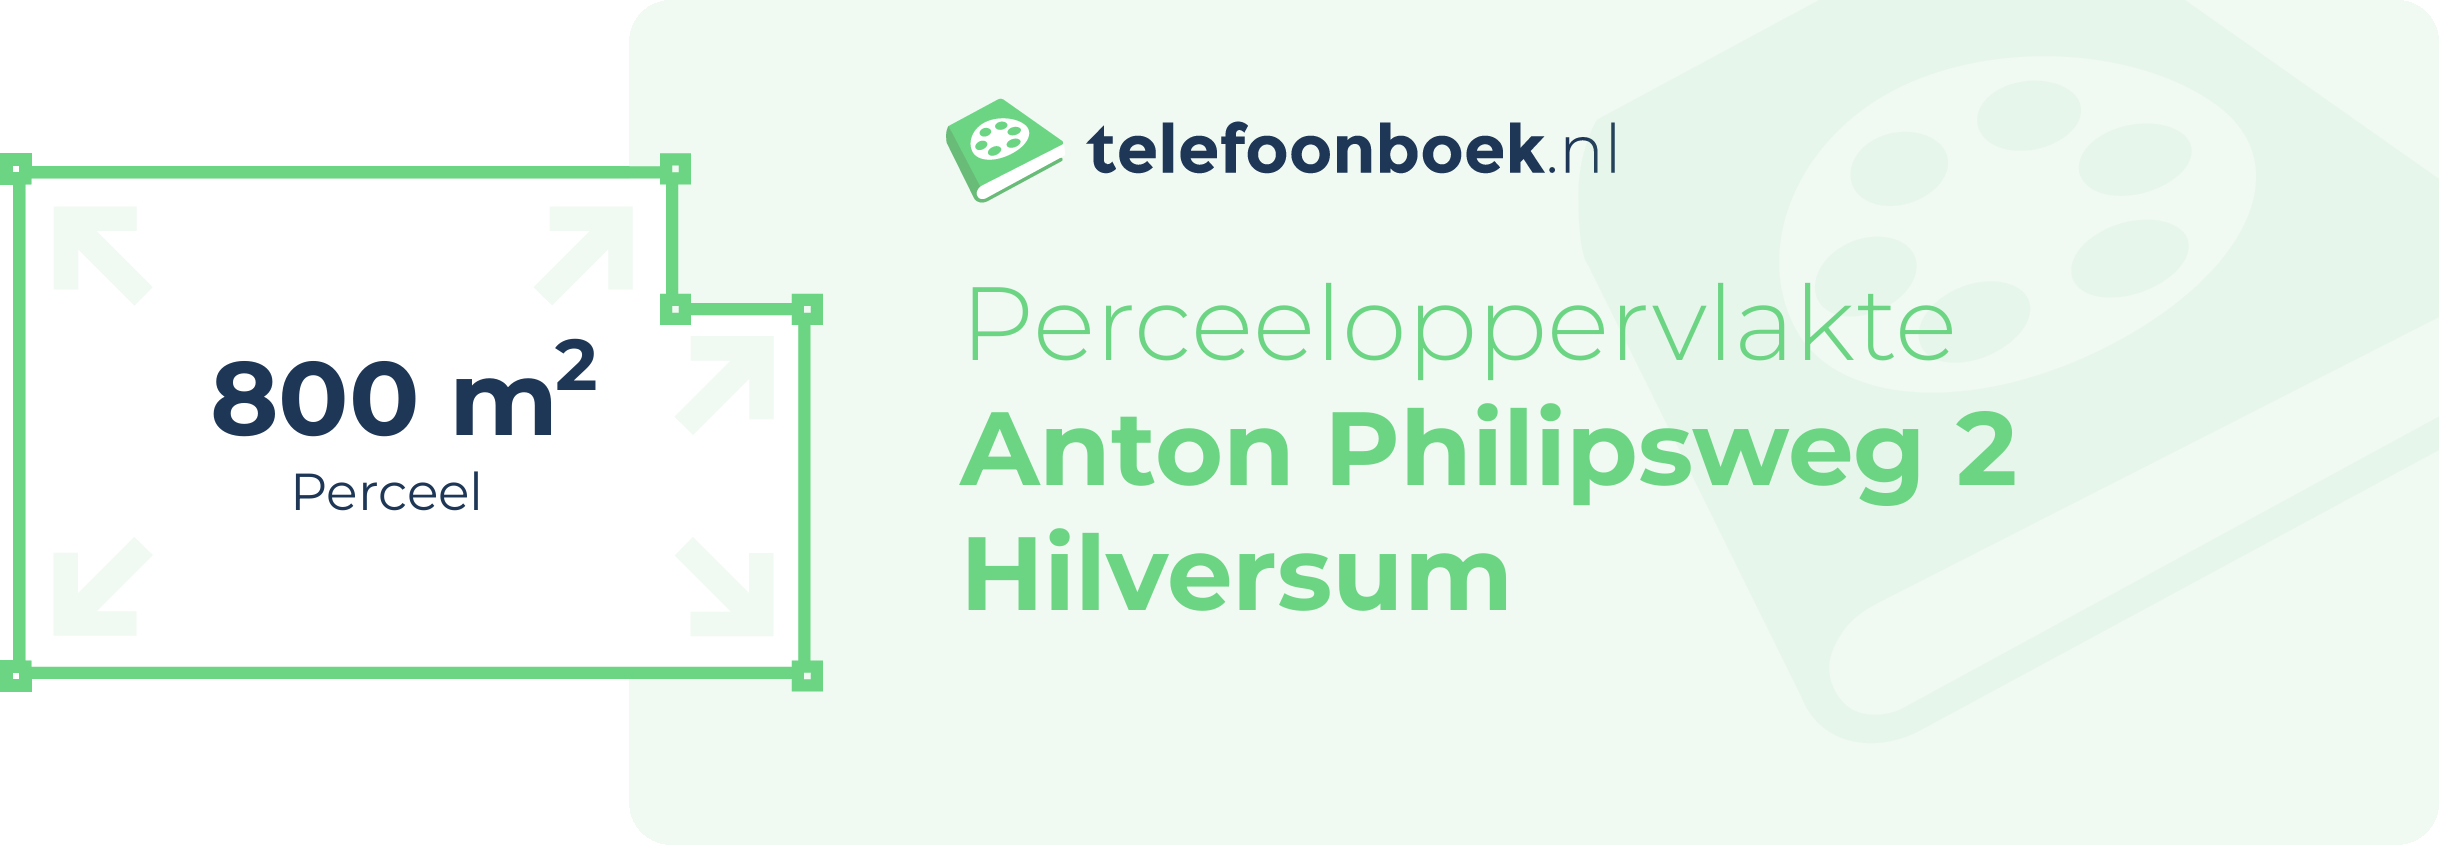 Perceeloppervlakte Anton Philipsweg 2 Hilversum